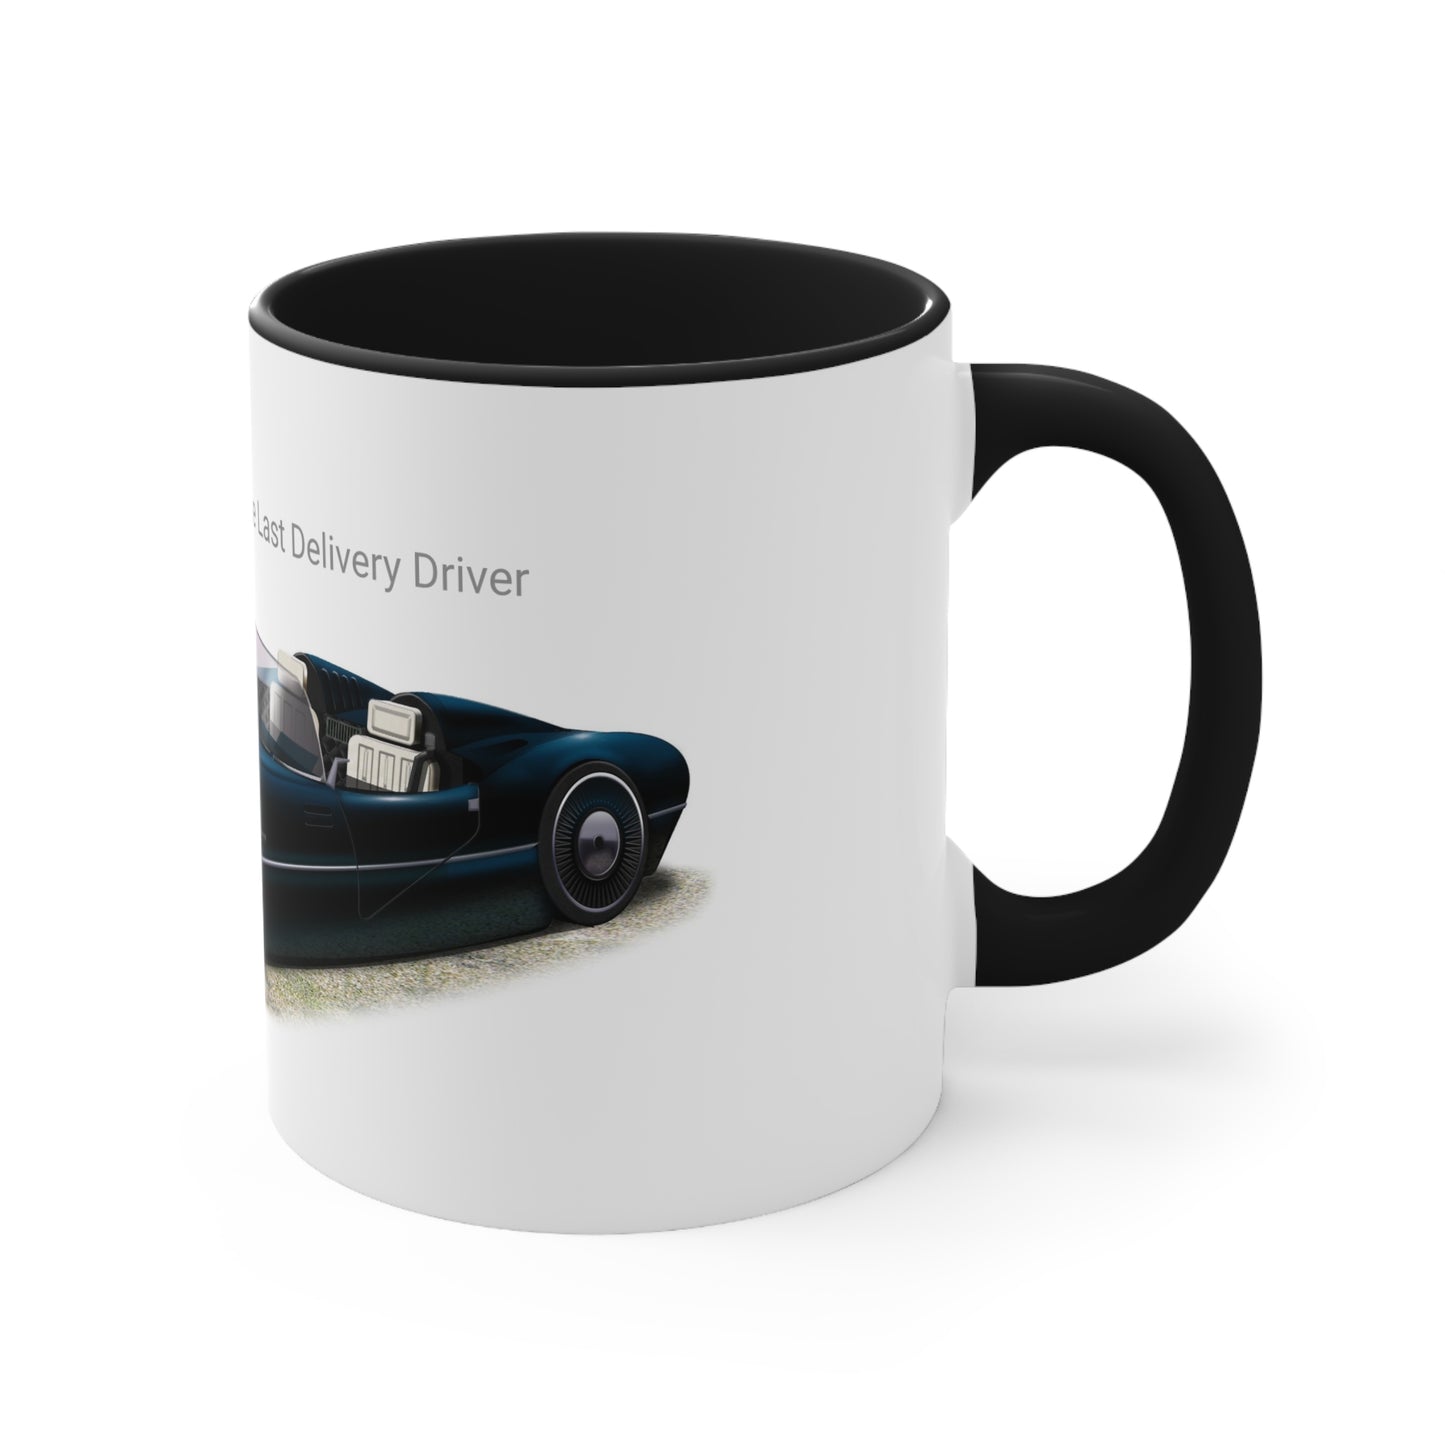 Last Delivery Driver - Black Betsy - Coffee Mug, 11oz